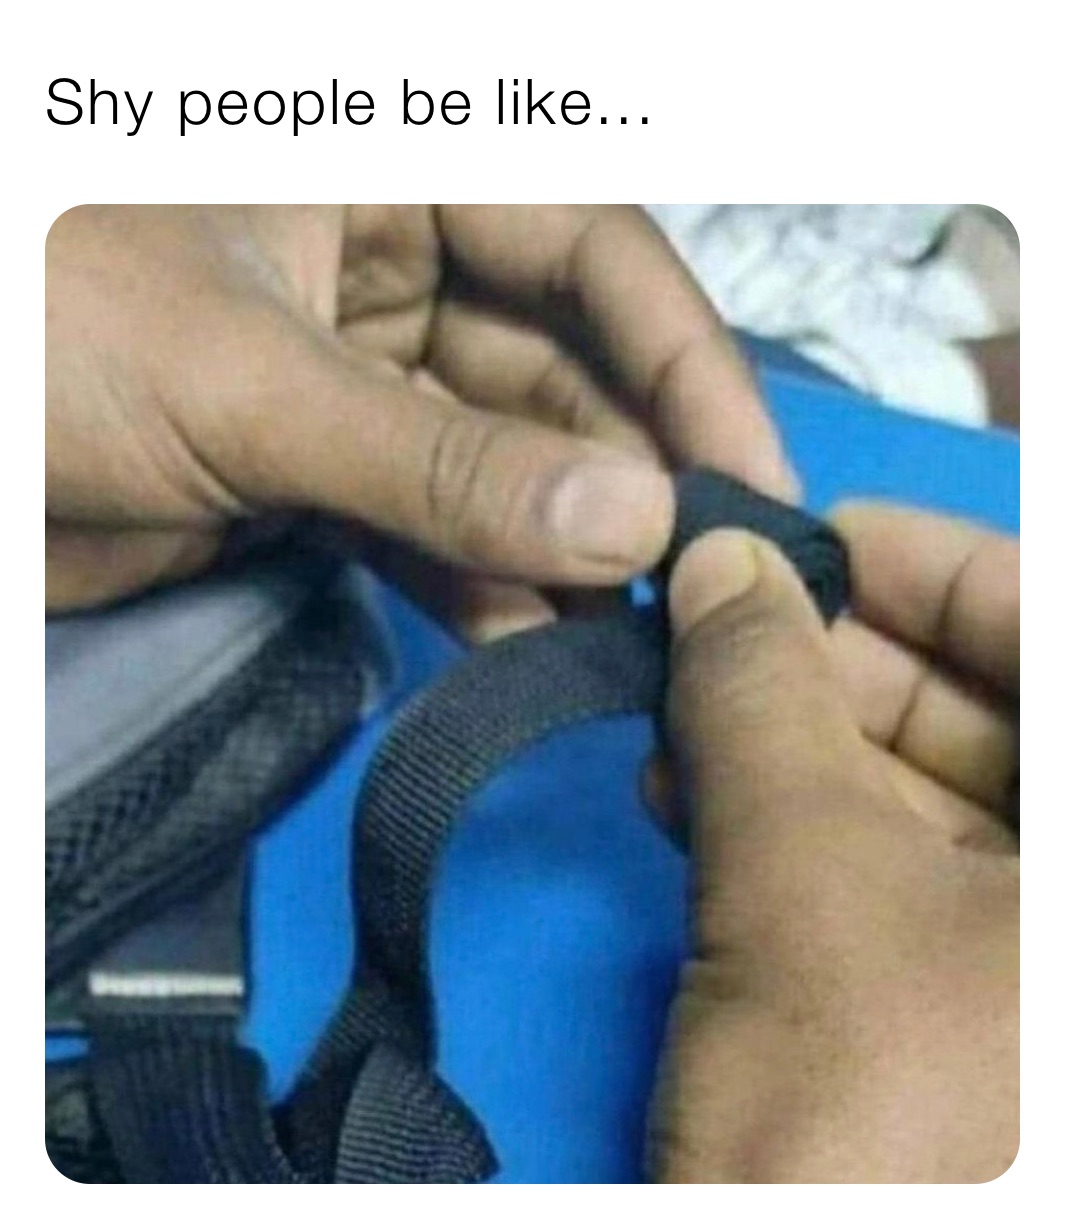 Shy people be like...